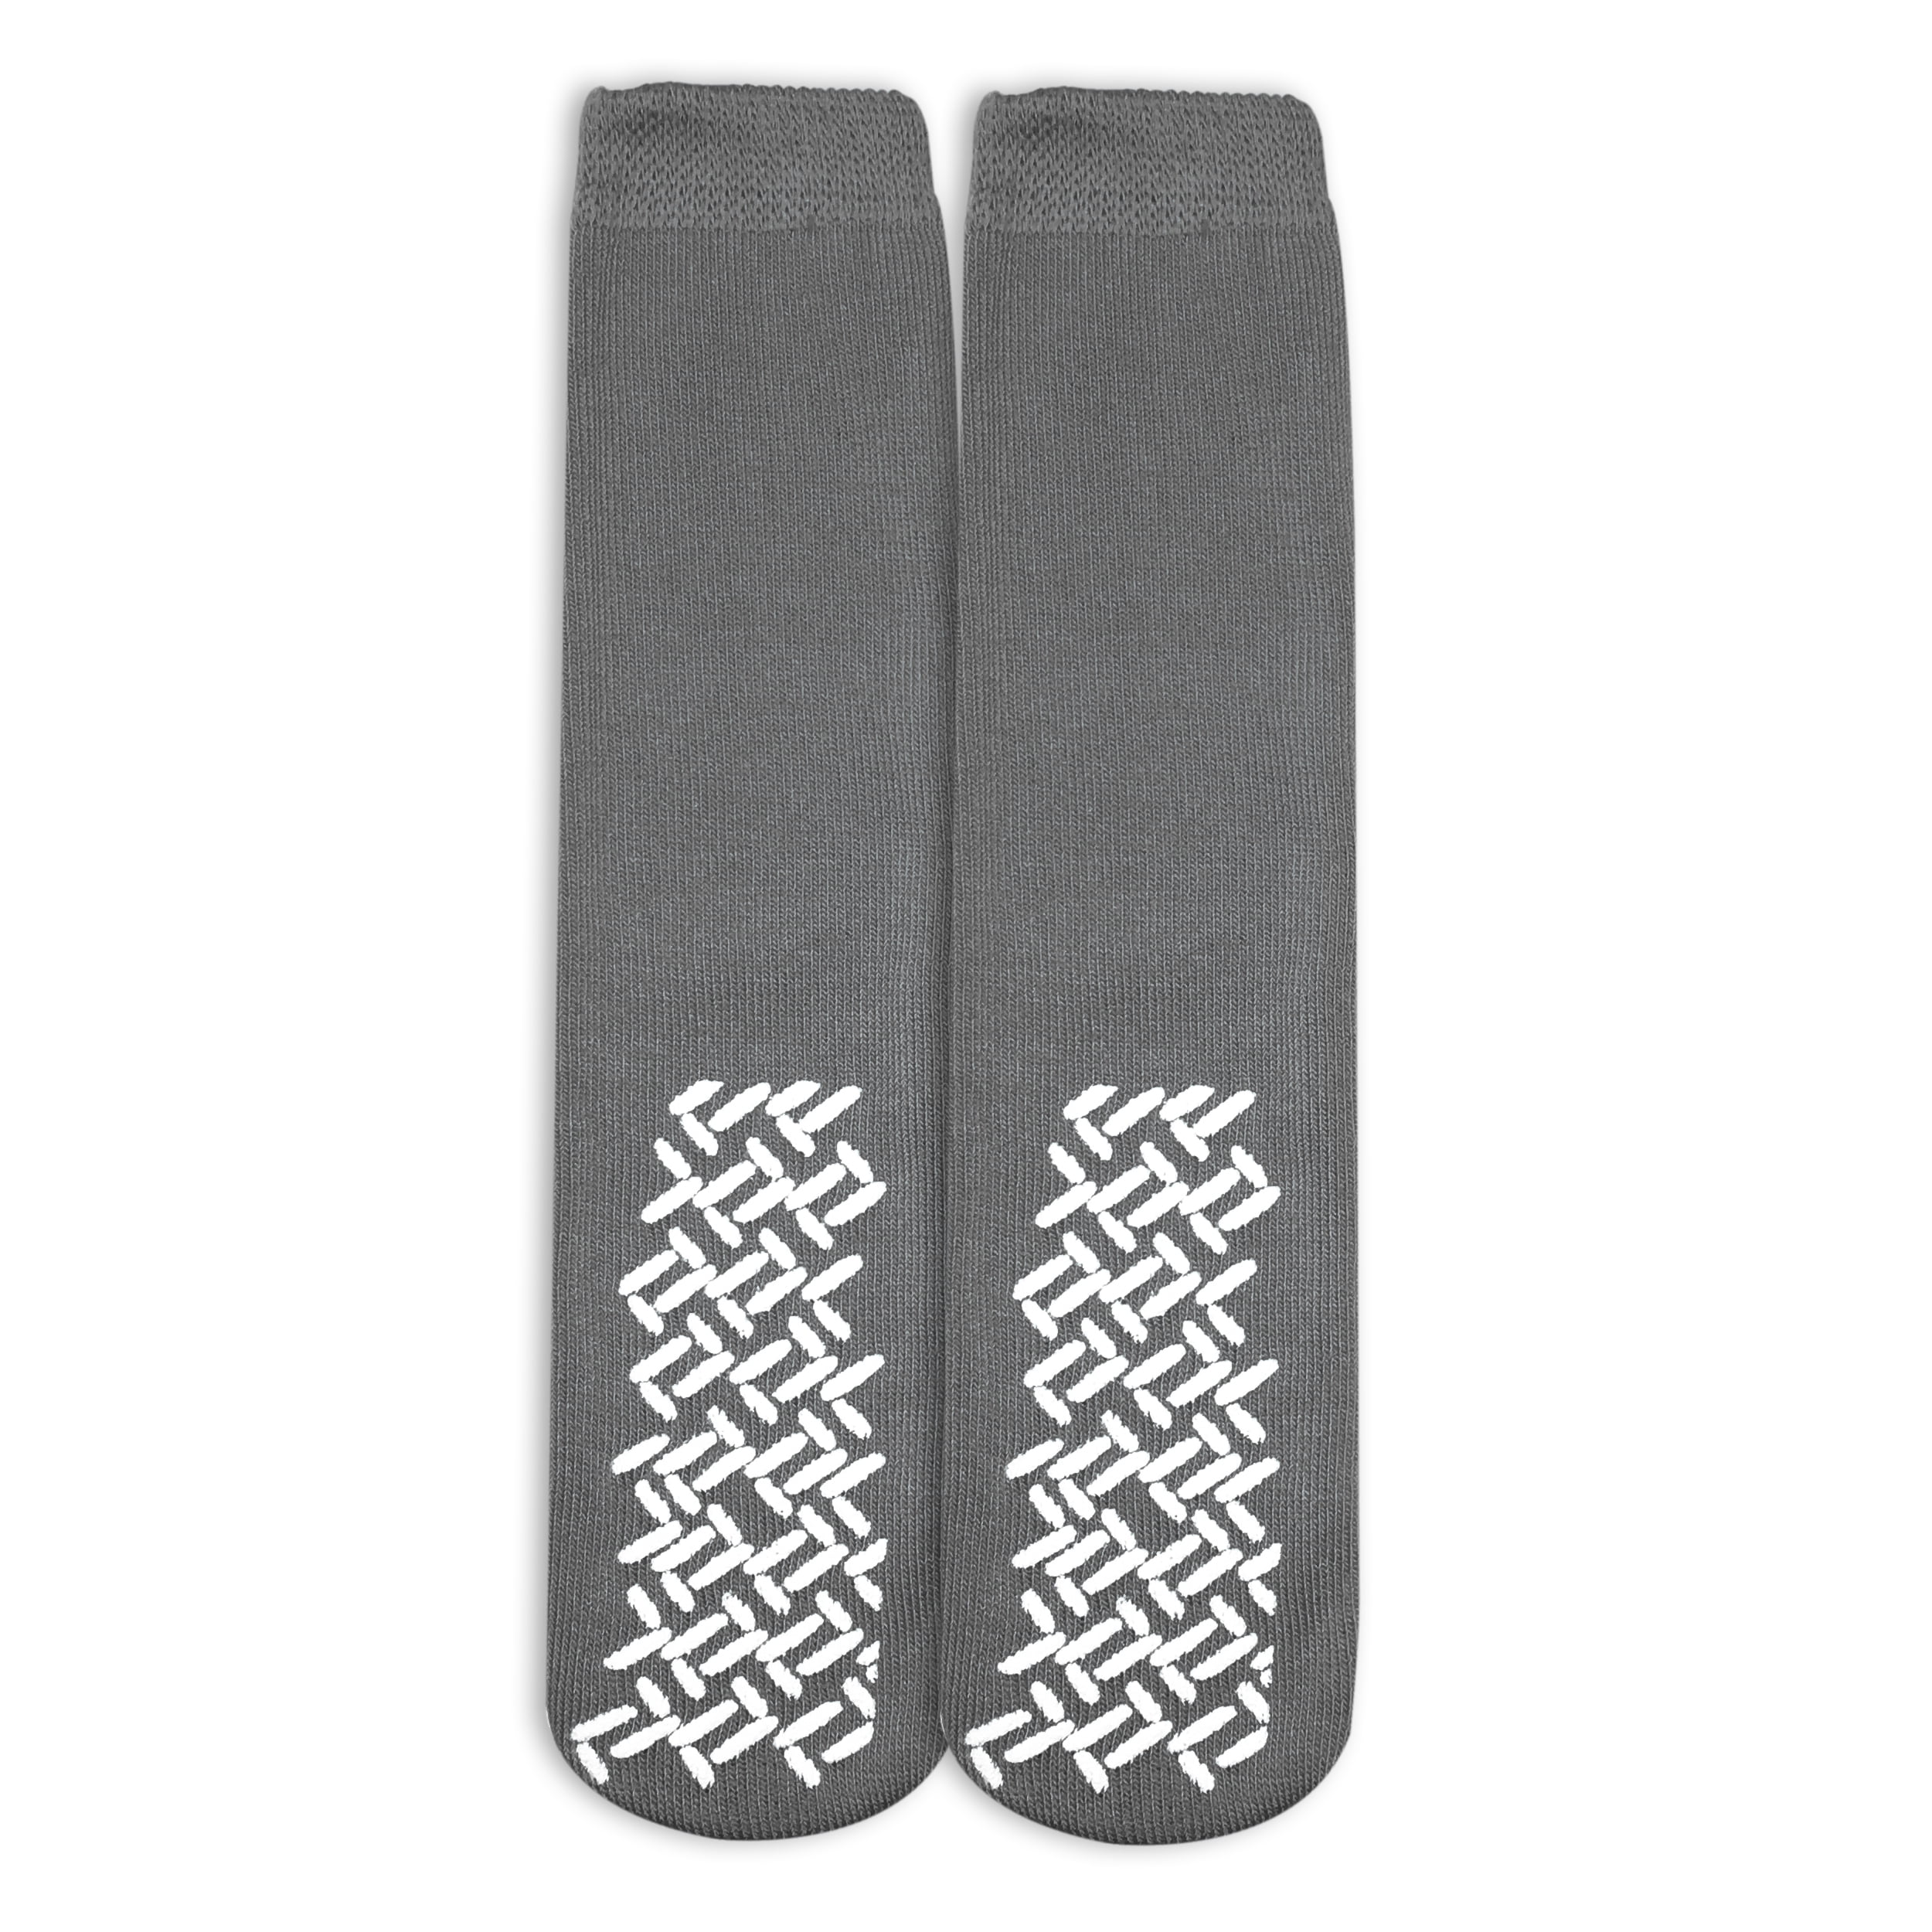 Nobles Assorted Anti Skid/ No Slip Hospital Gripper Socks, Great